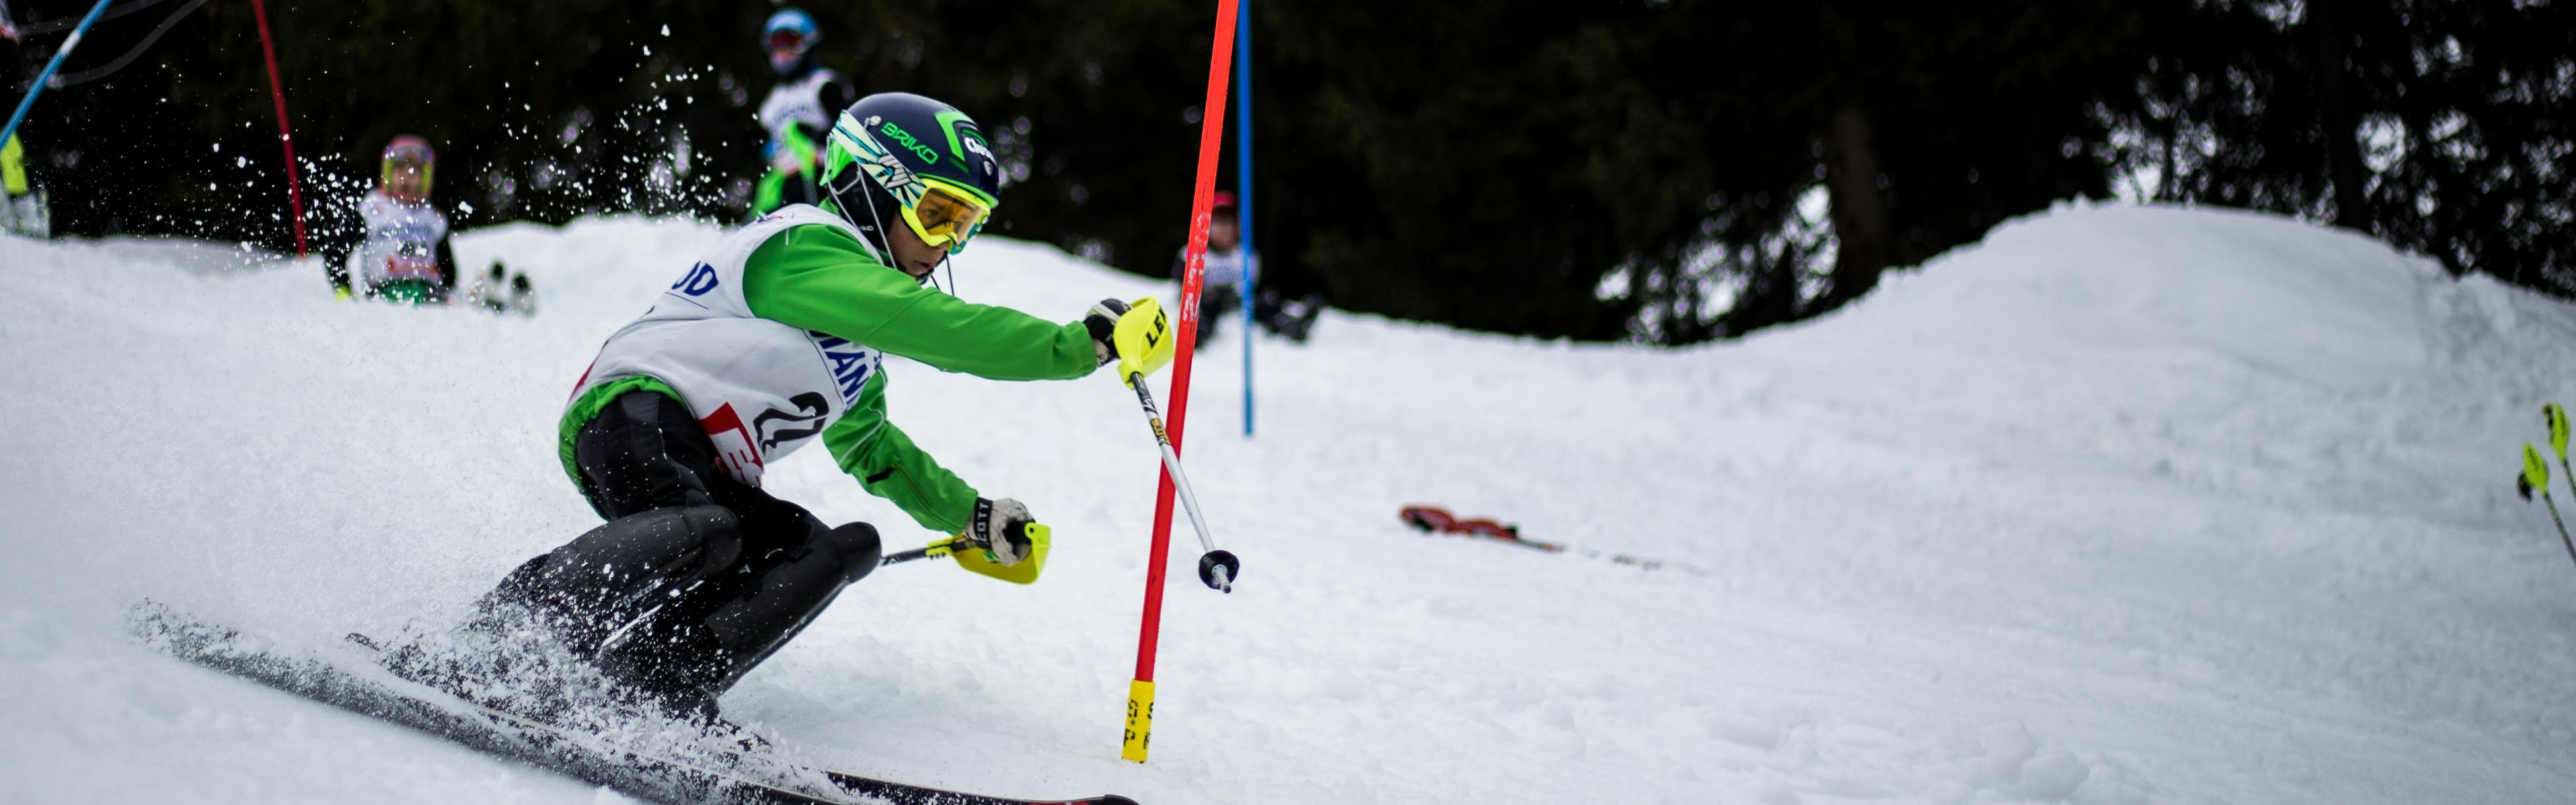 Ski Racing 101: An Expert Guide on How to Get into Ski Racing